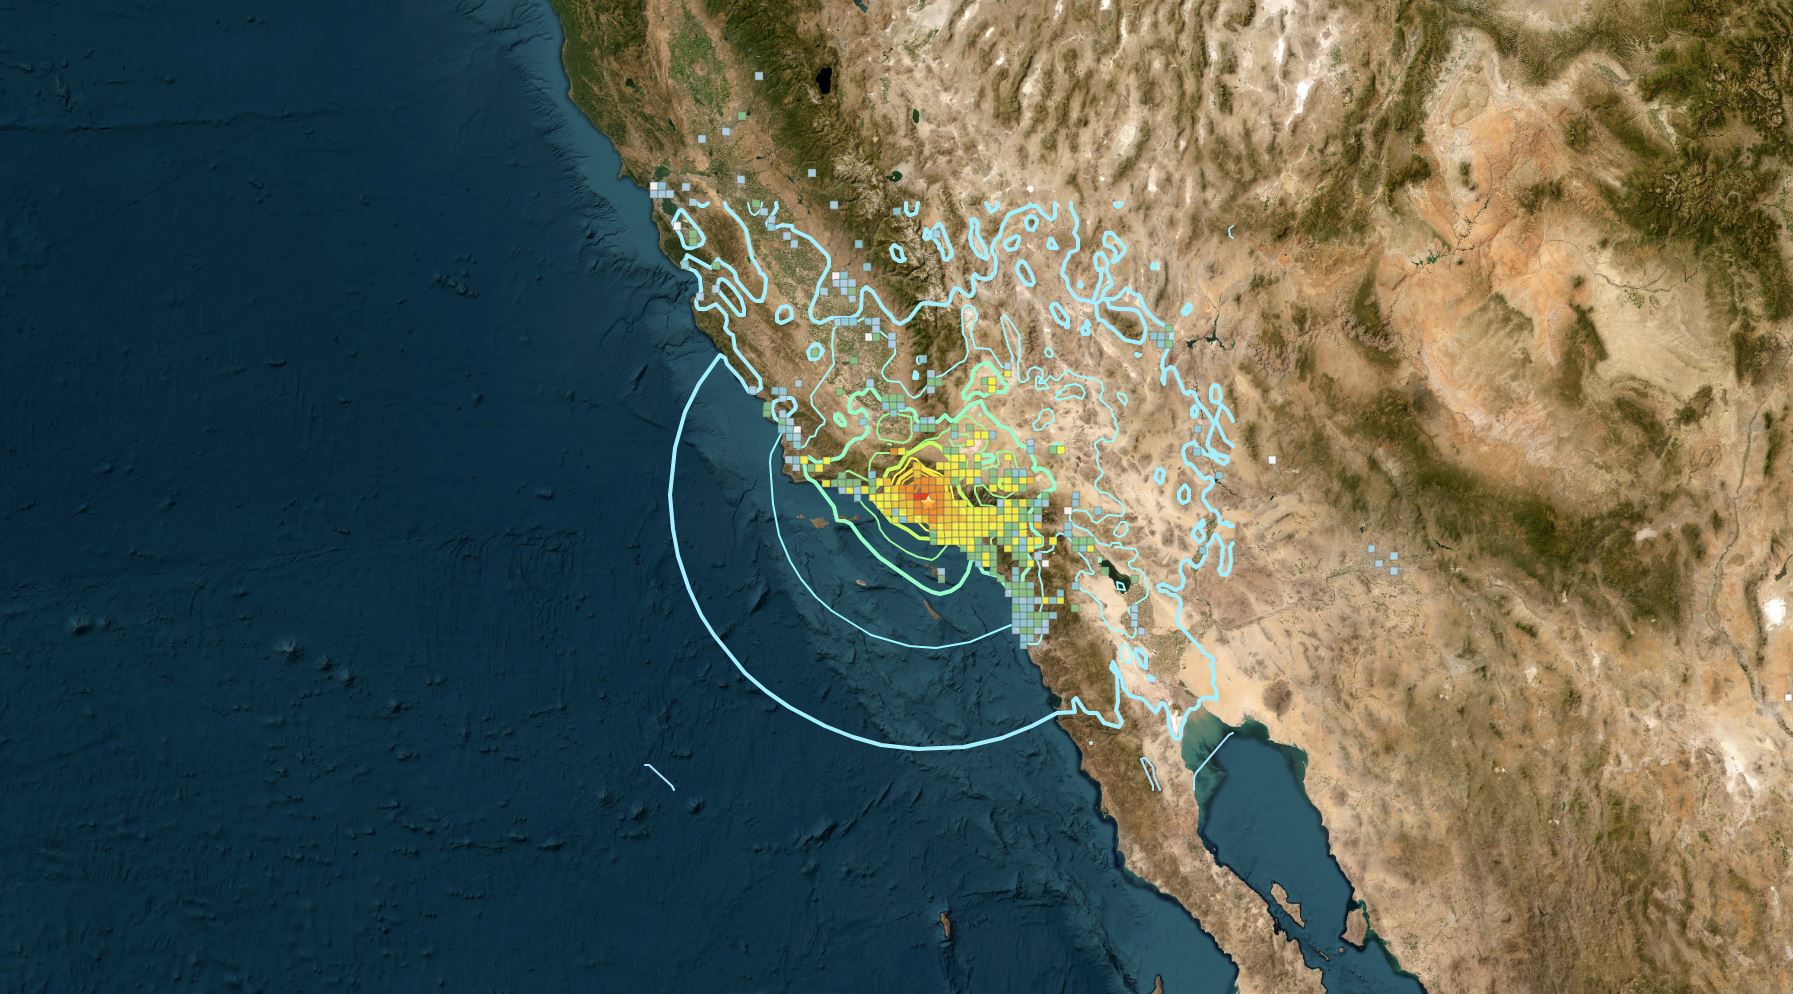 northridge earthquake case study